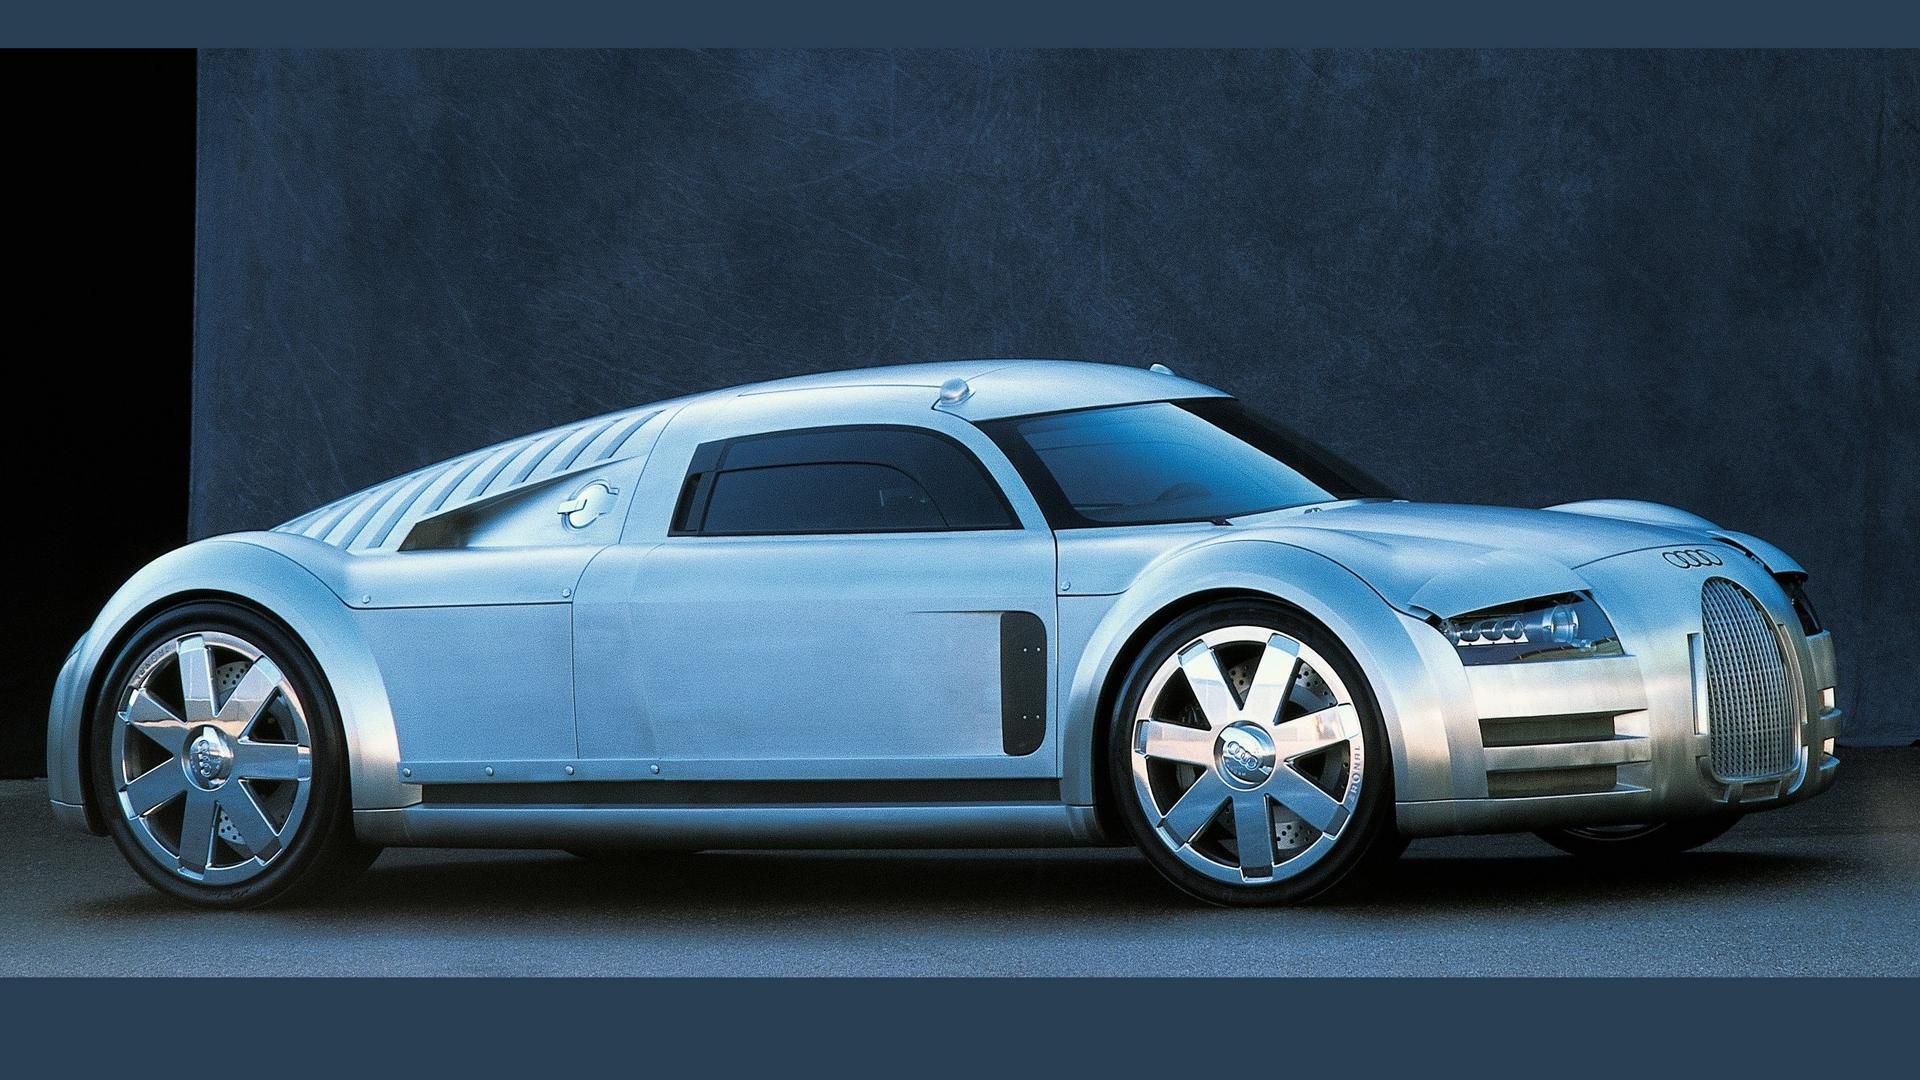 The Audi Rosemeyer laid foundation to the Bugatti Veyron